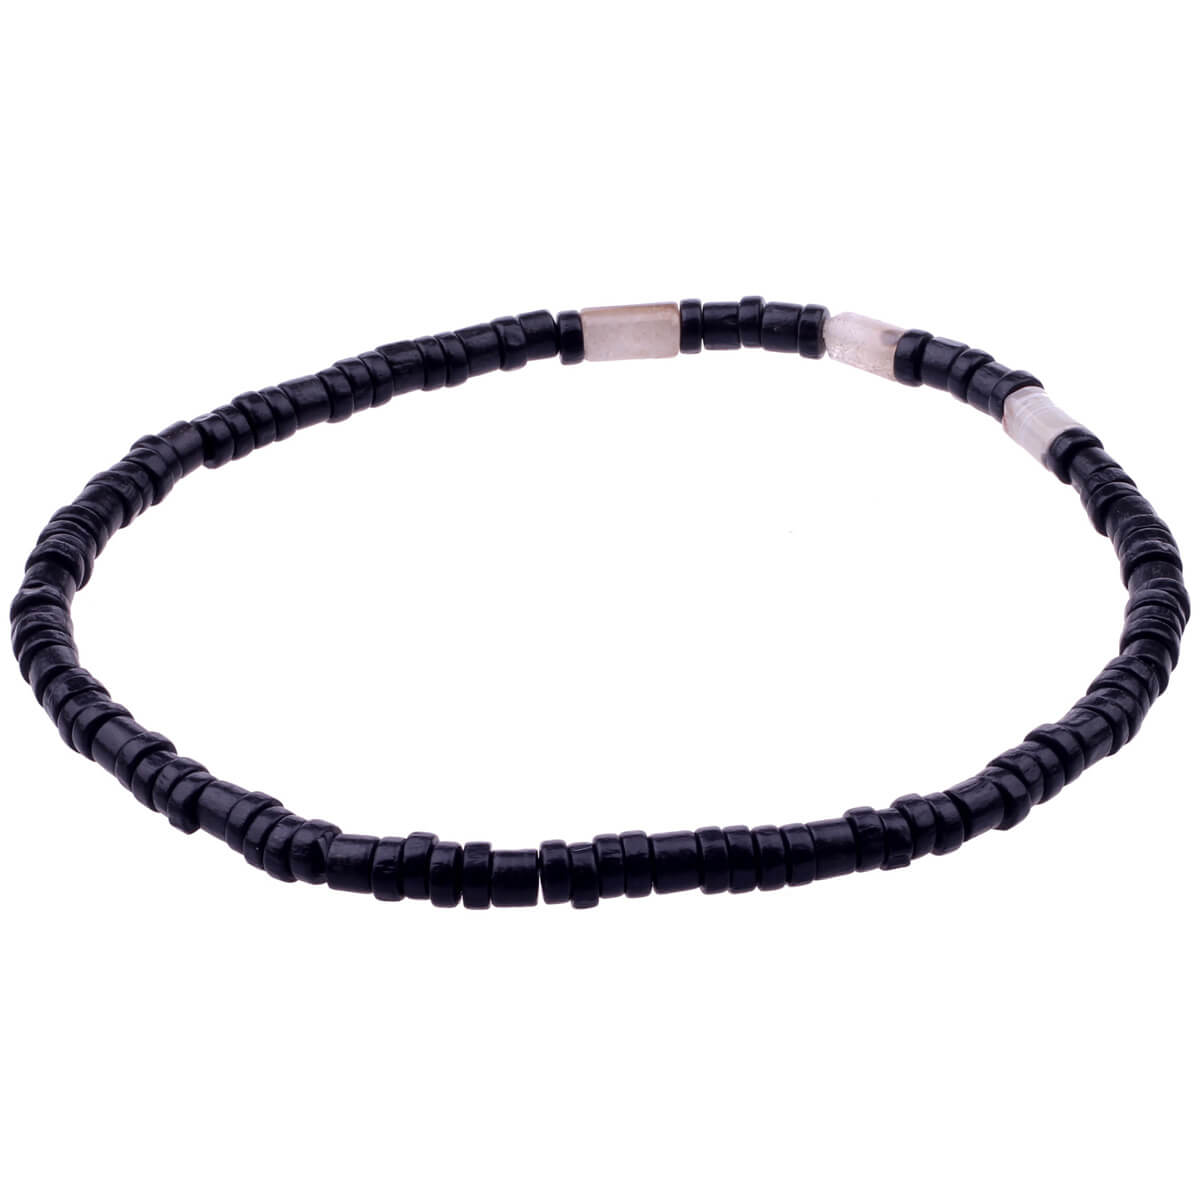 Dark wooden beads with stone beads